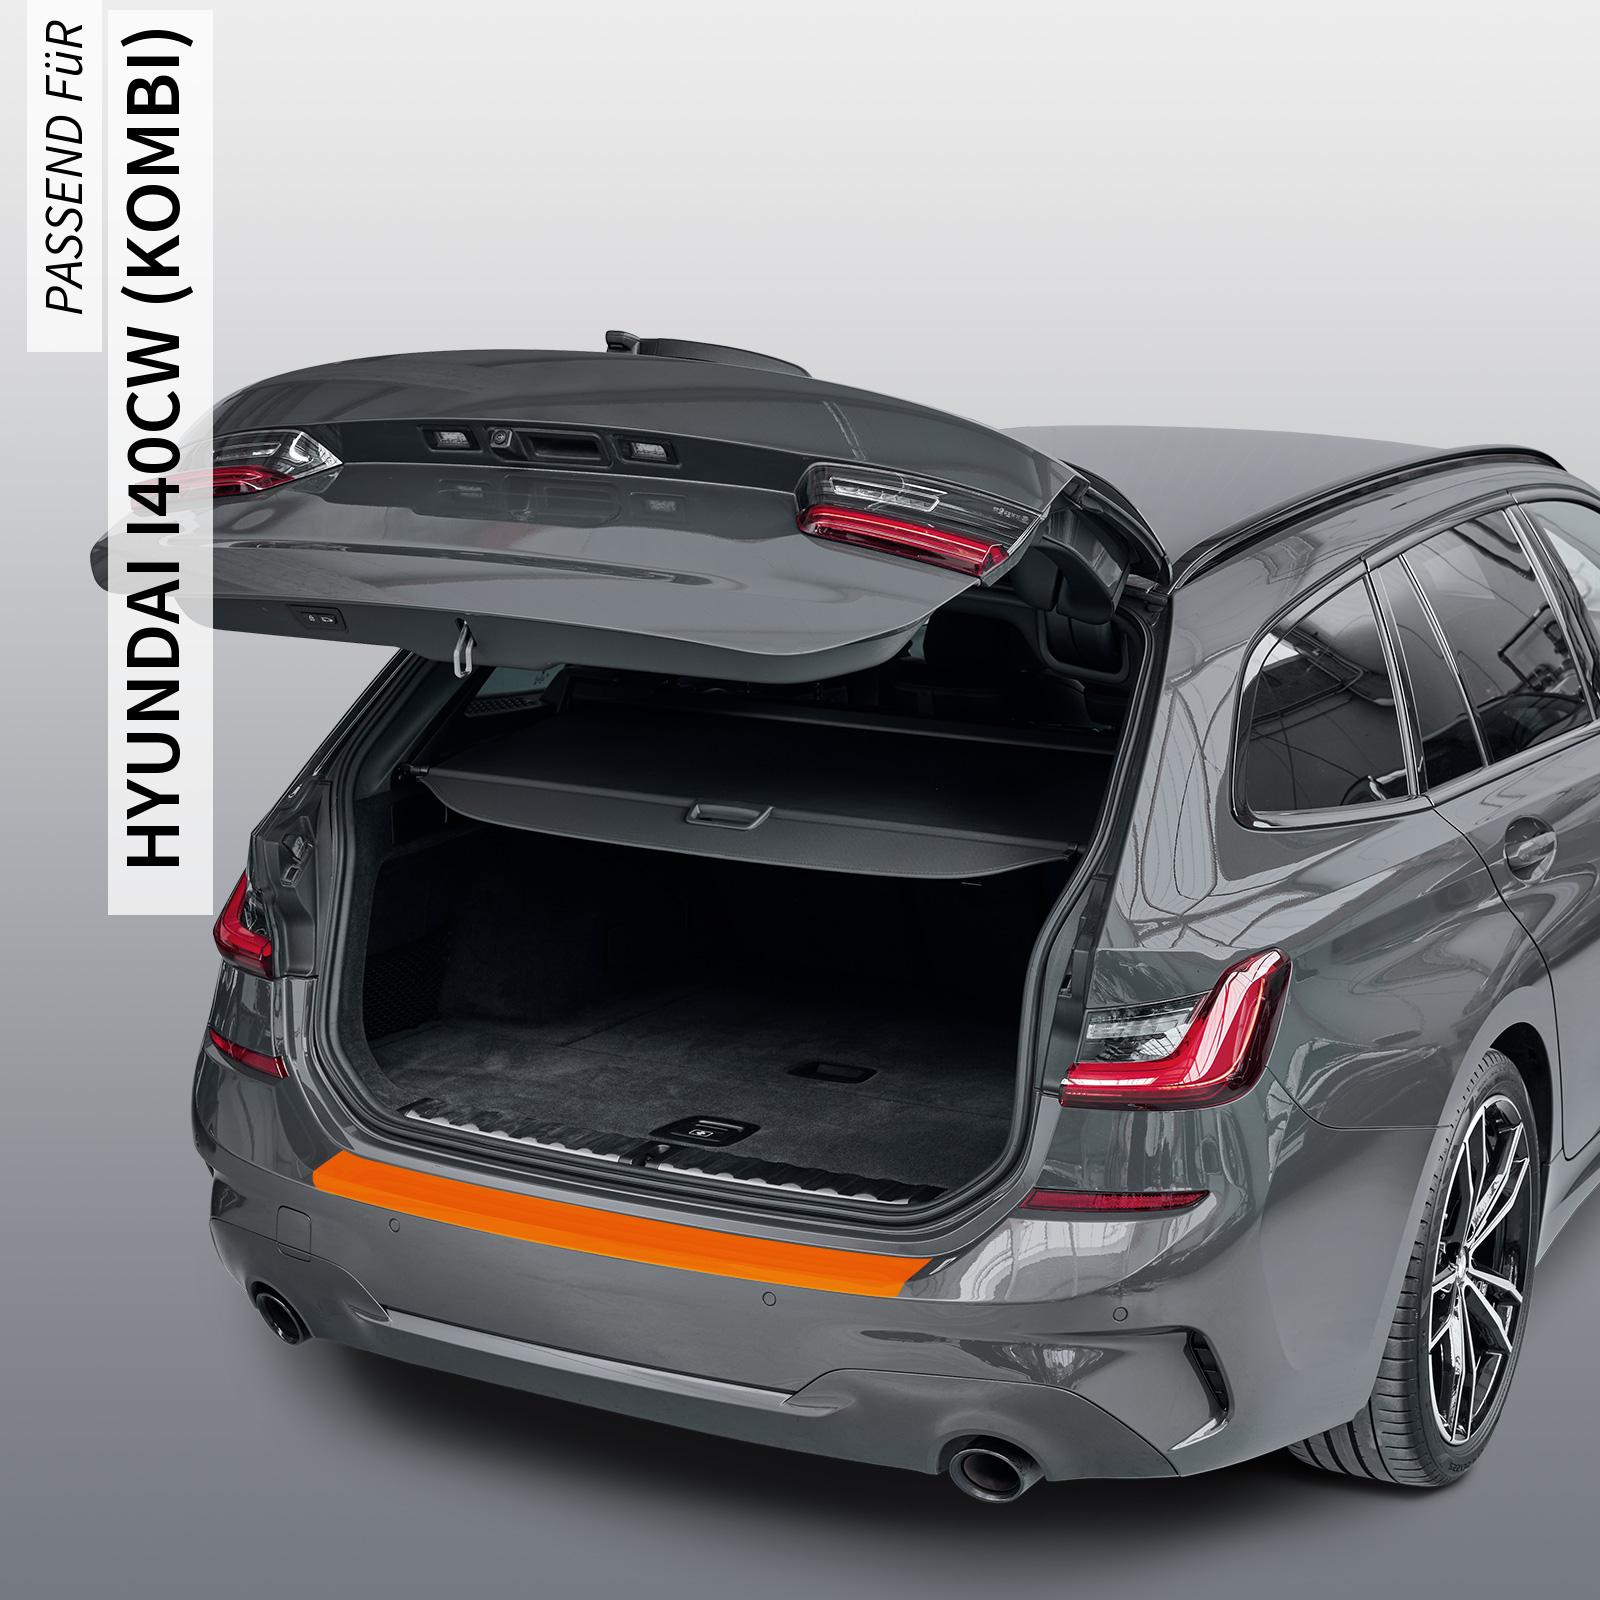 Ladekantenschutzfolie - Transparent Glatt MATT 110 µm stark  für Hyundai i40cw (Kombi) ab BJ 09/2011 + Facelift